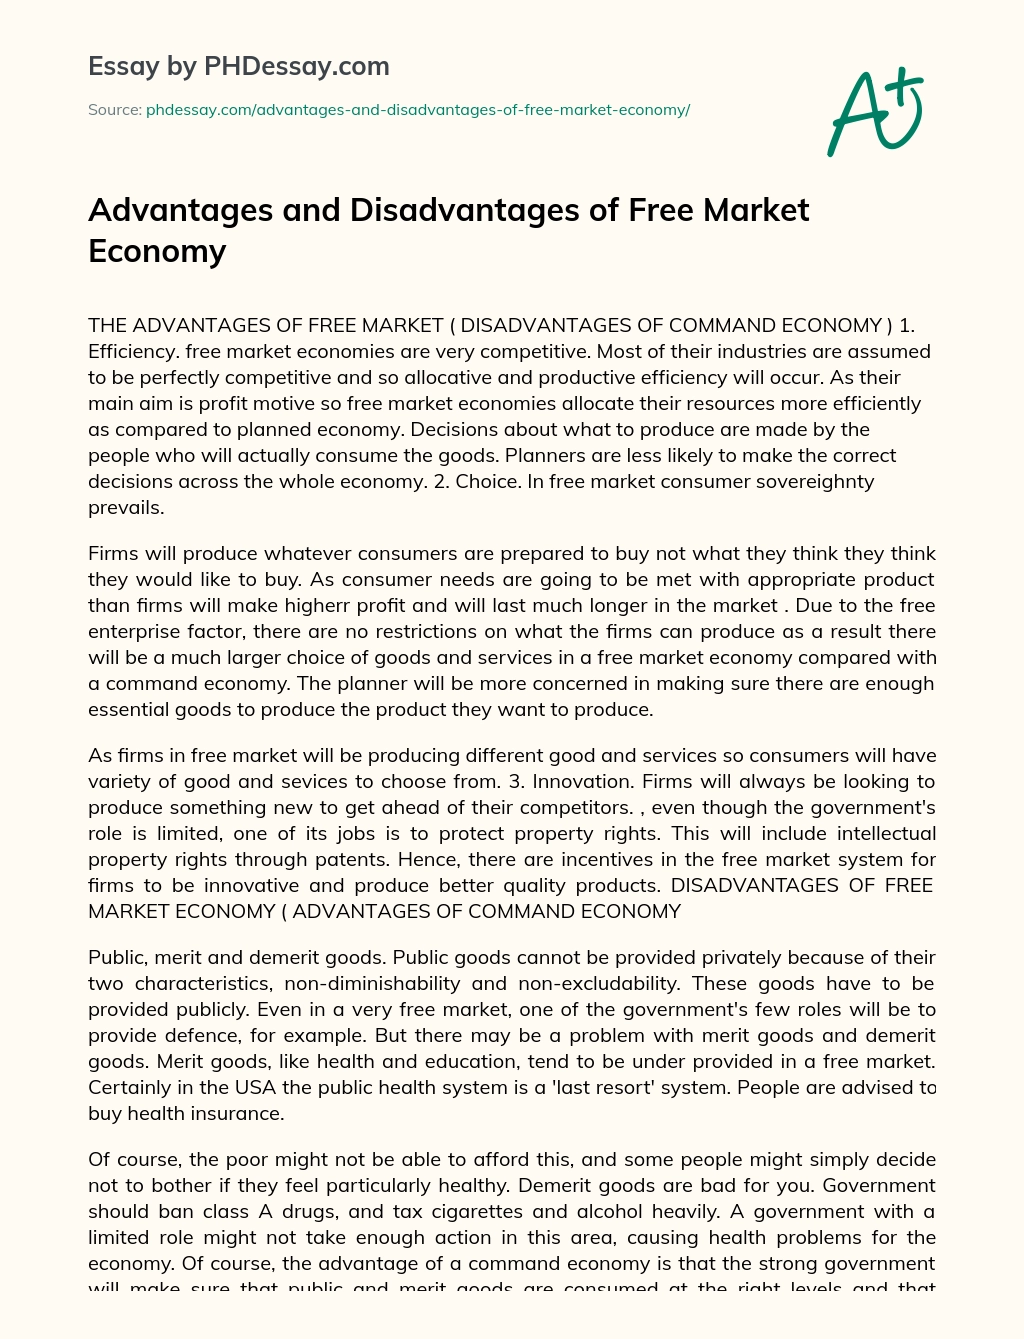 Advantages and Disadvantages of Free Market Economy essay